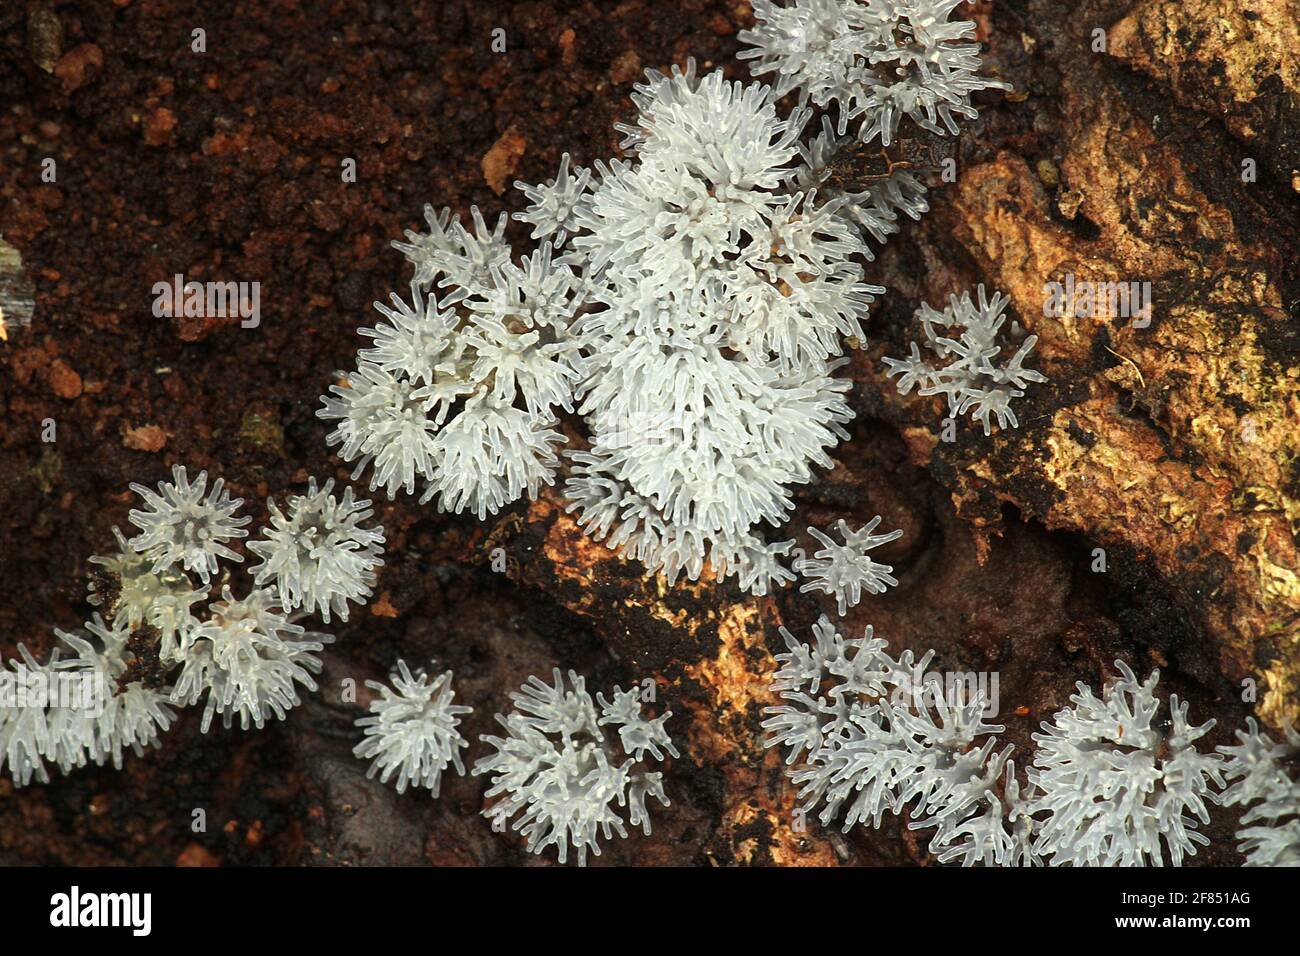 Coral slime fungus (Ceratiomyxa) Stock Photo